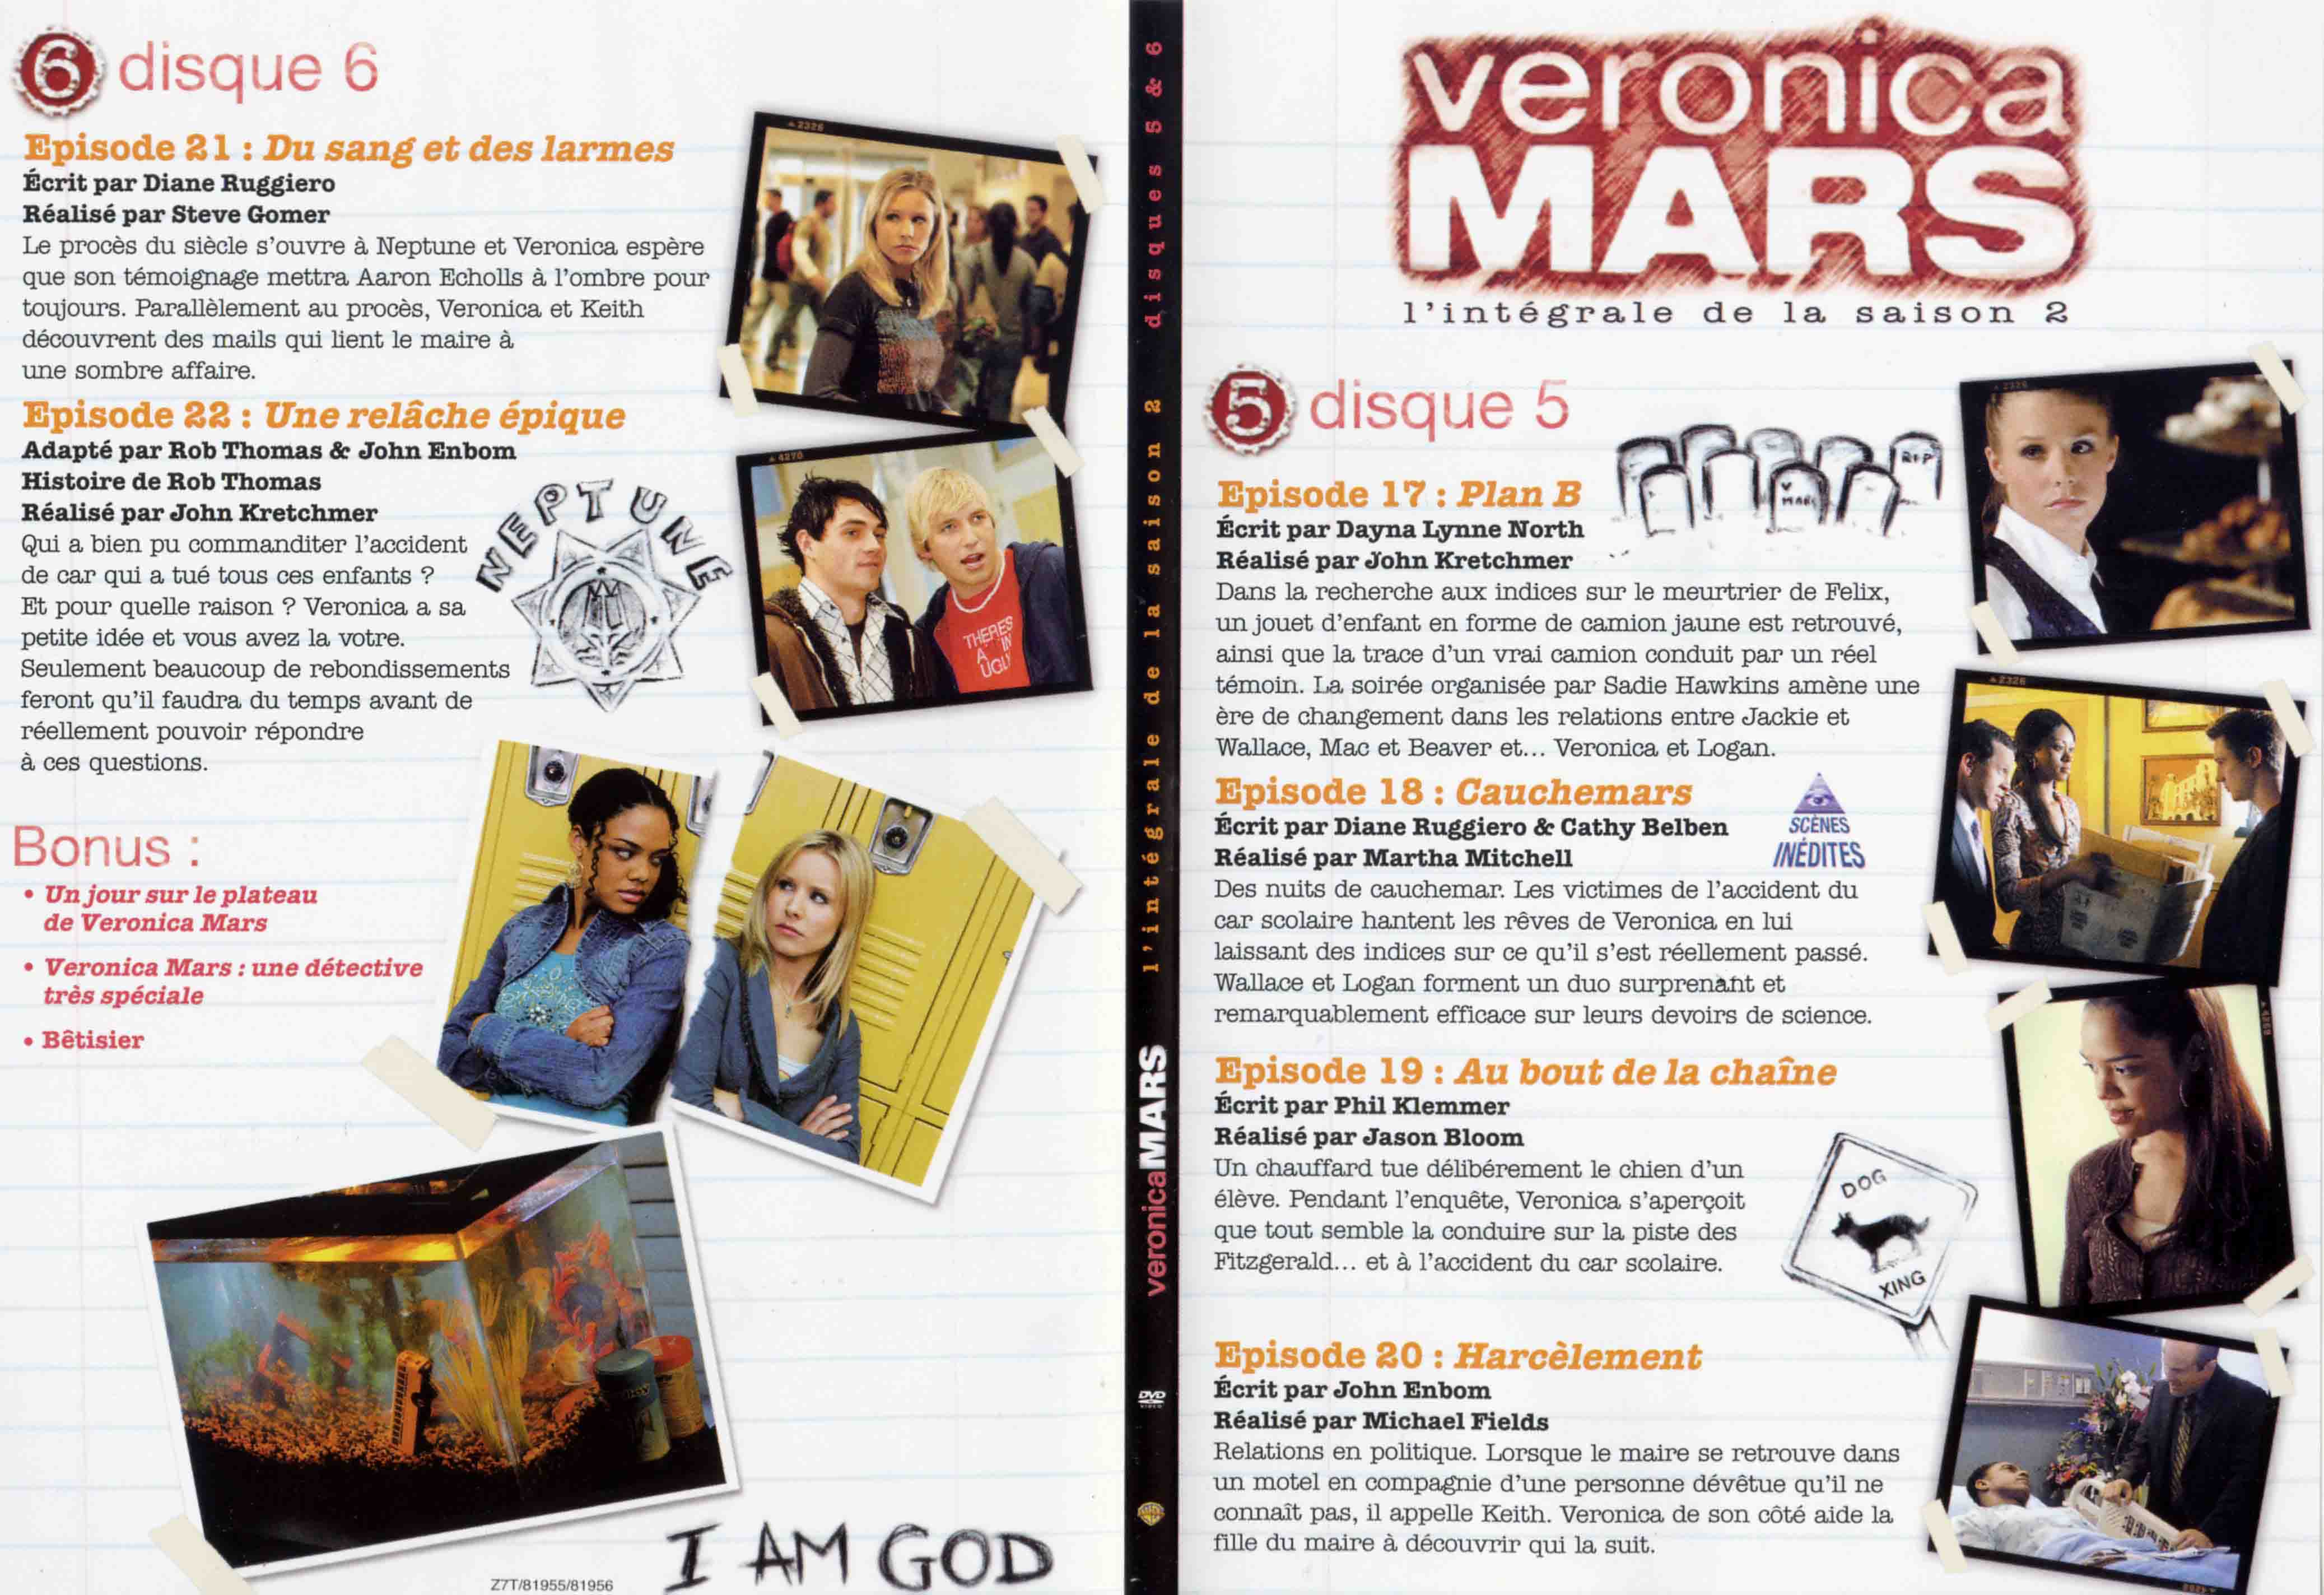 Jaquette DVD Veronica Mars Saison 2 DVD 3